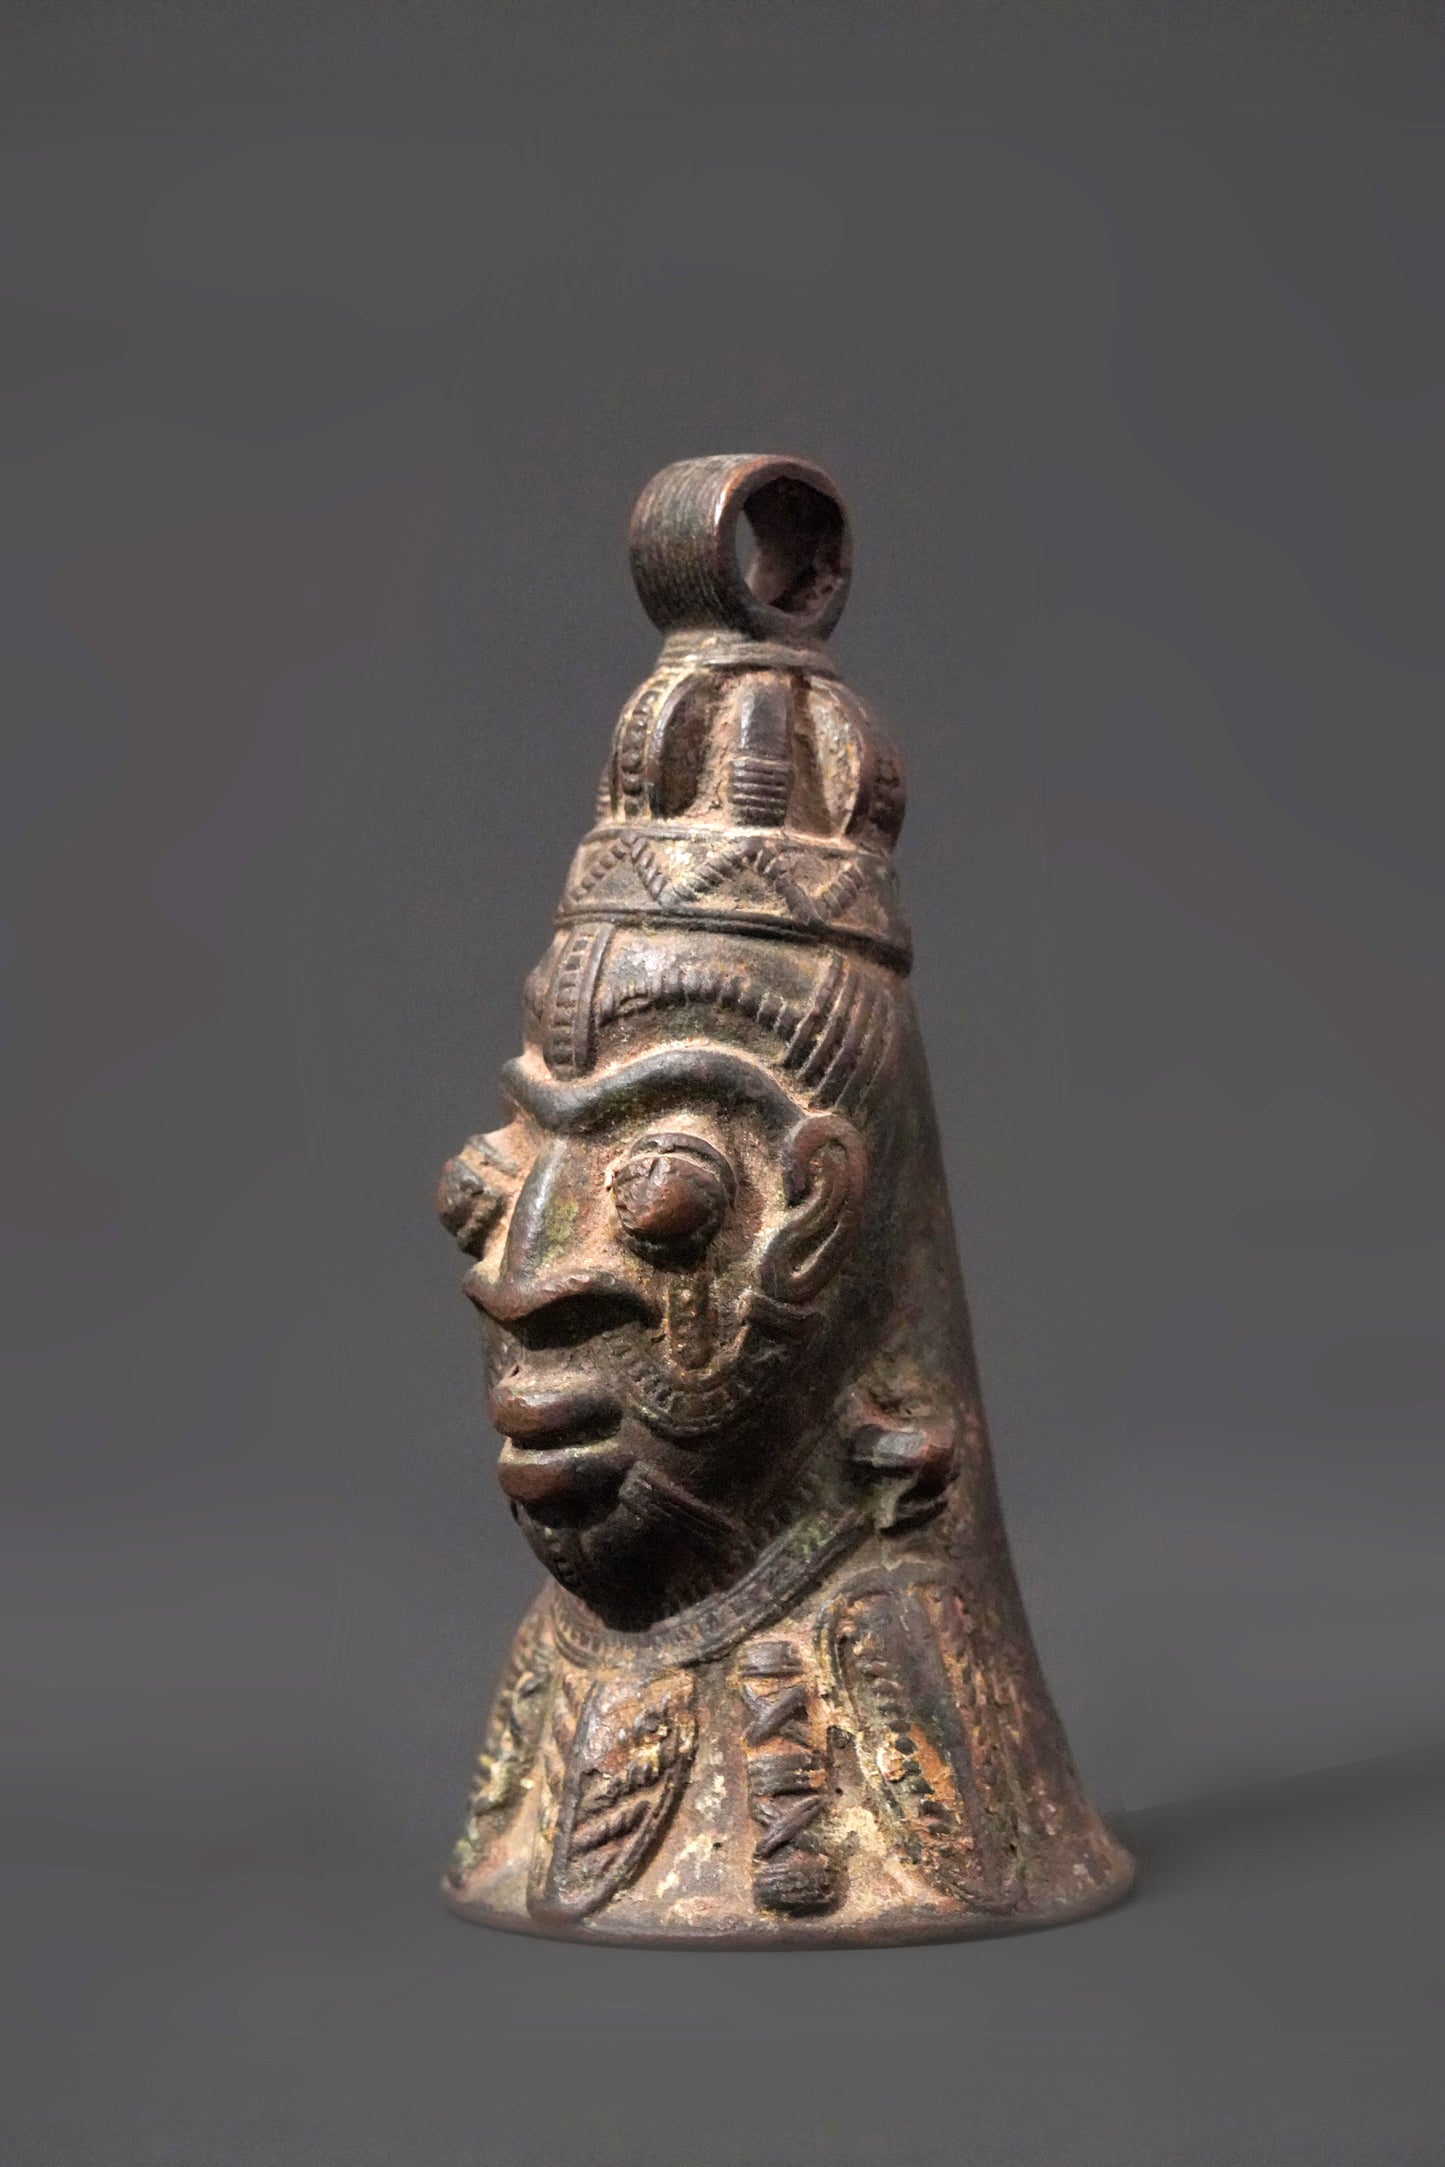 A Yoruba or Benin brass bell